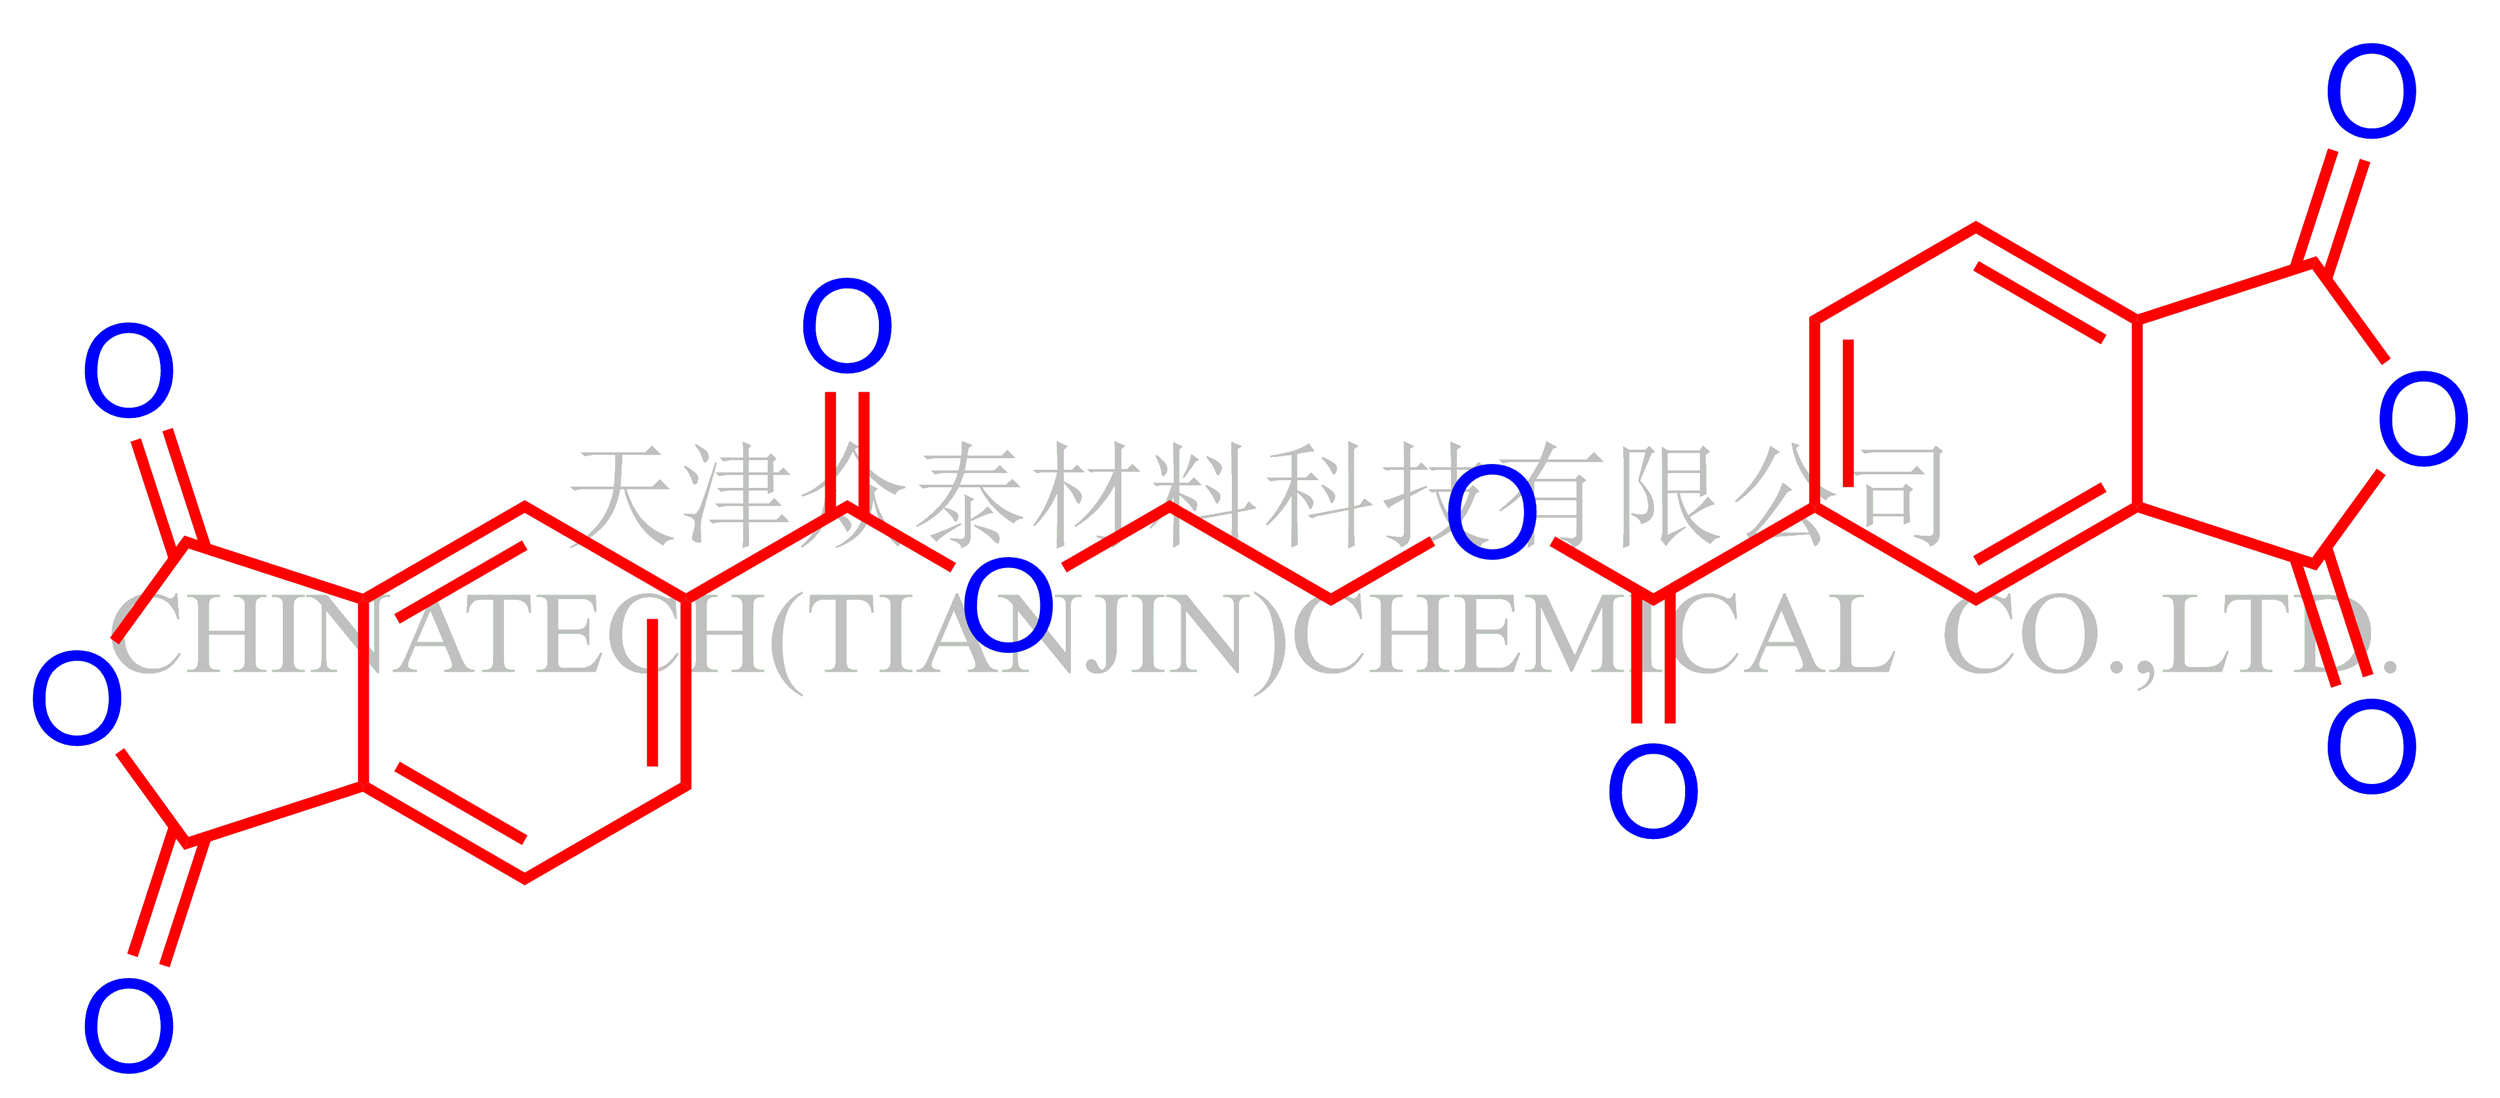 二乙二醇(4-三甲酸酐)(TMEG),Ethylene glycol bis(4-trimellitate anhydride) (TMEG)